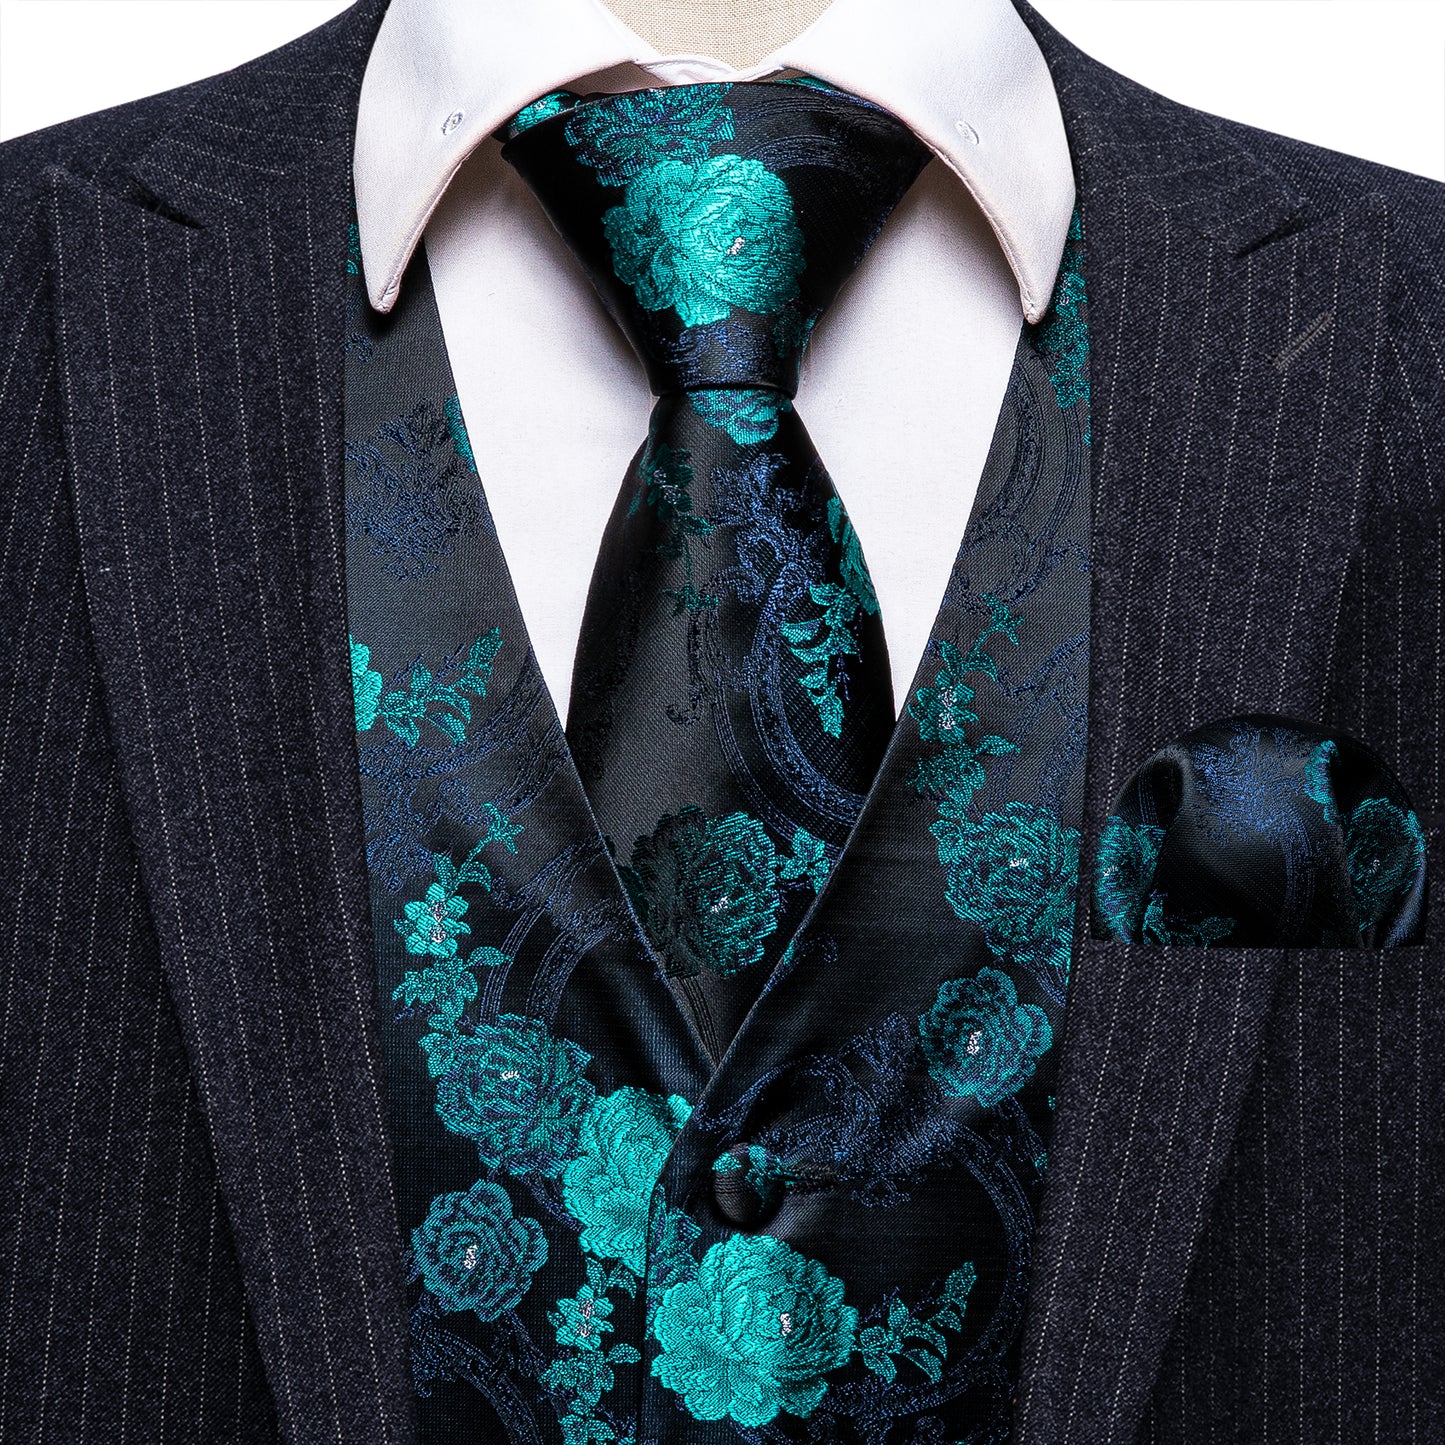 Designer Floral Waistcoat Silky Novelty Vest Paisley Aqua Peony